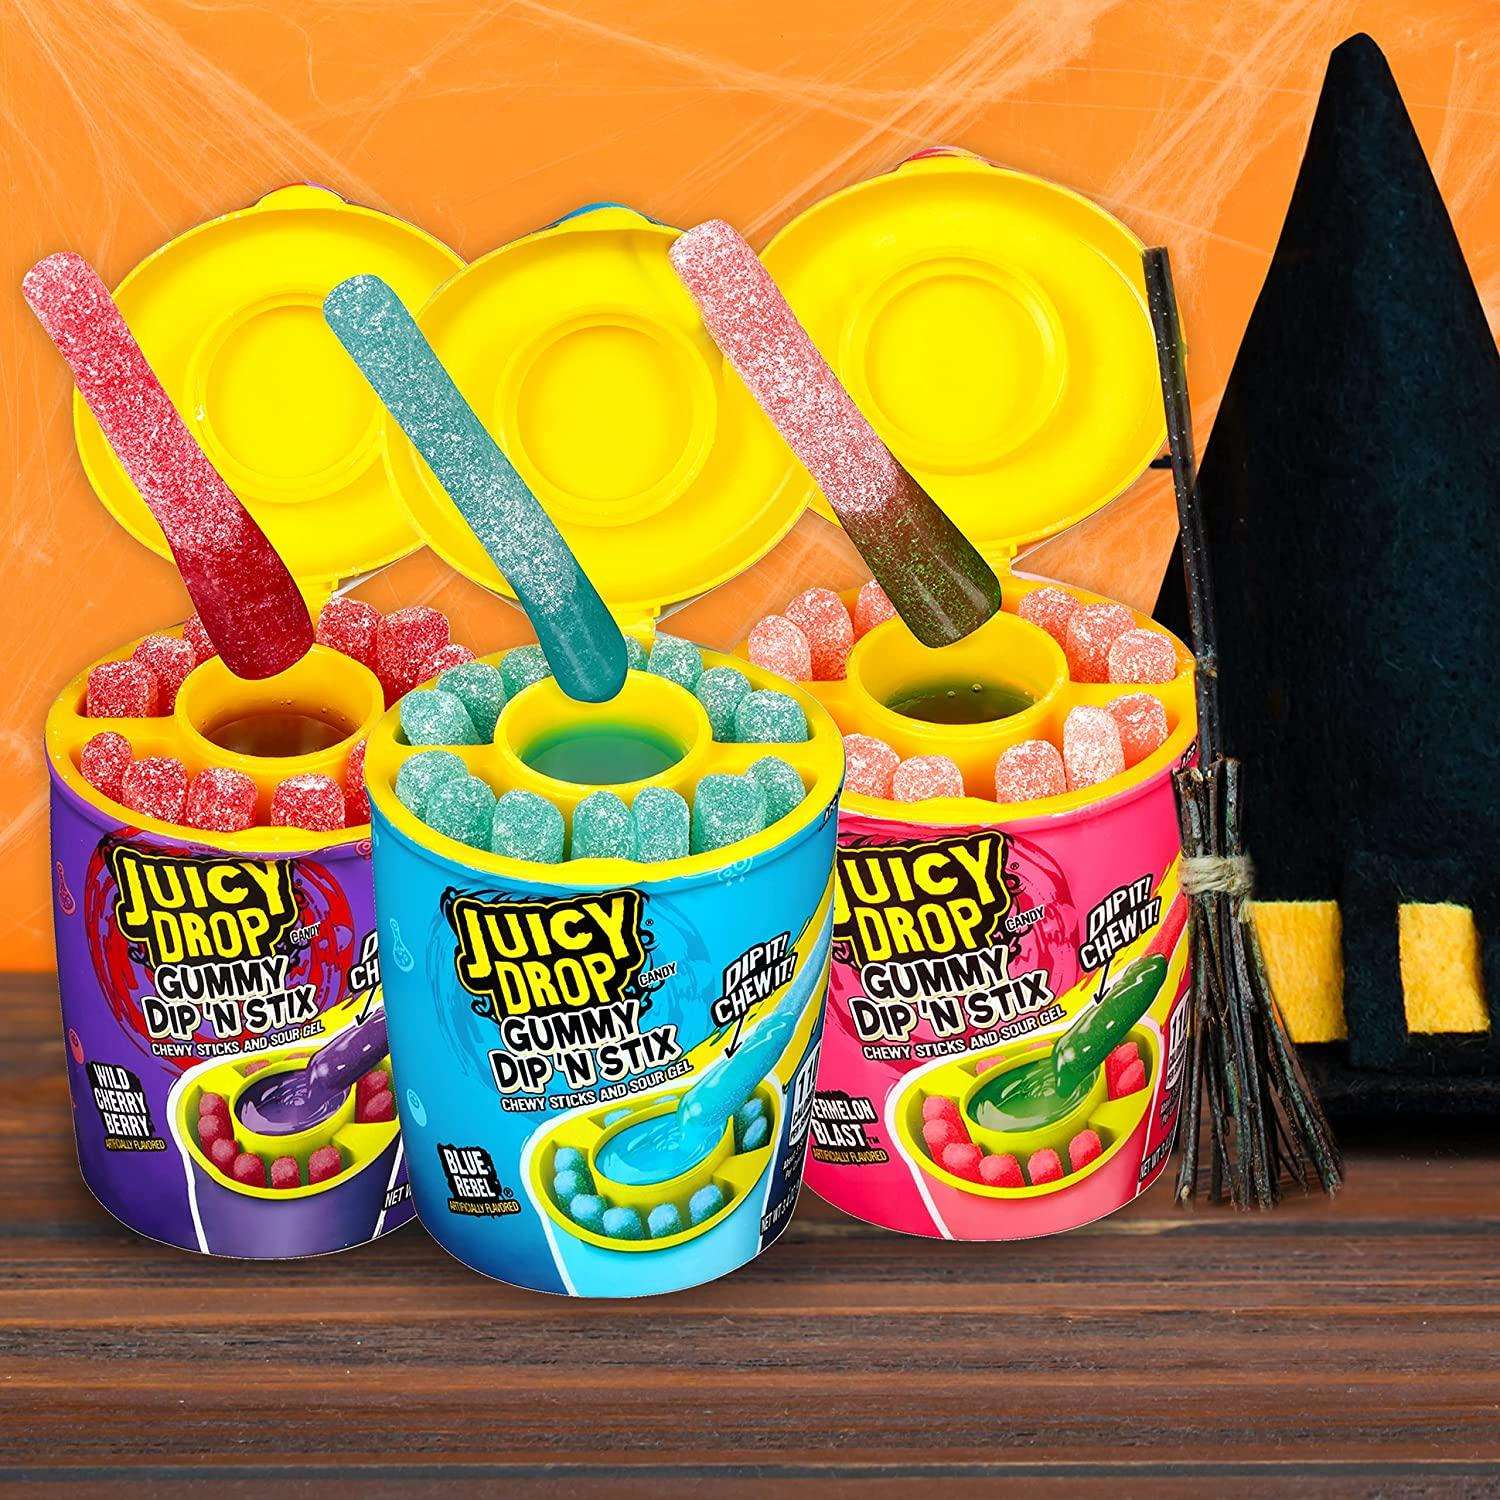 Juicy Drop Gummy Dip’n Stix USA